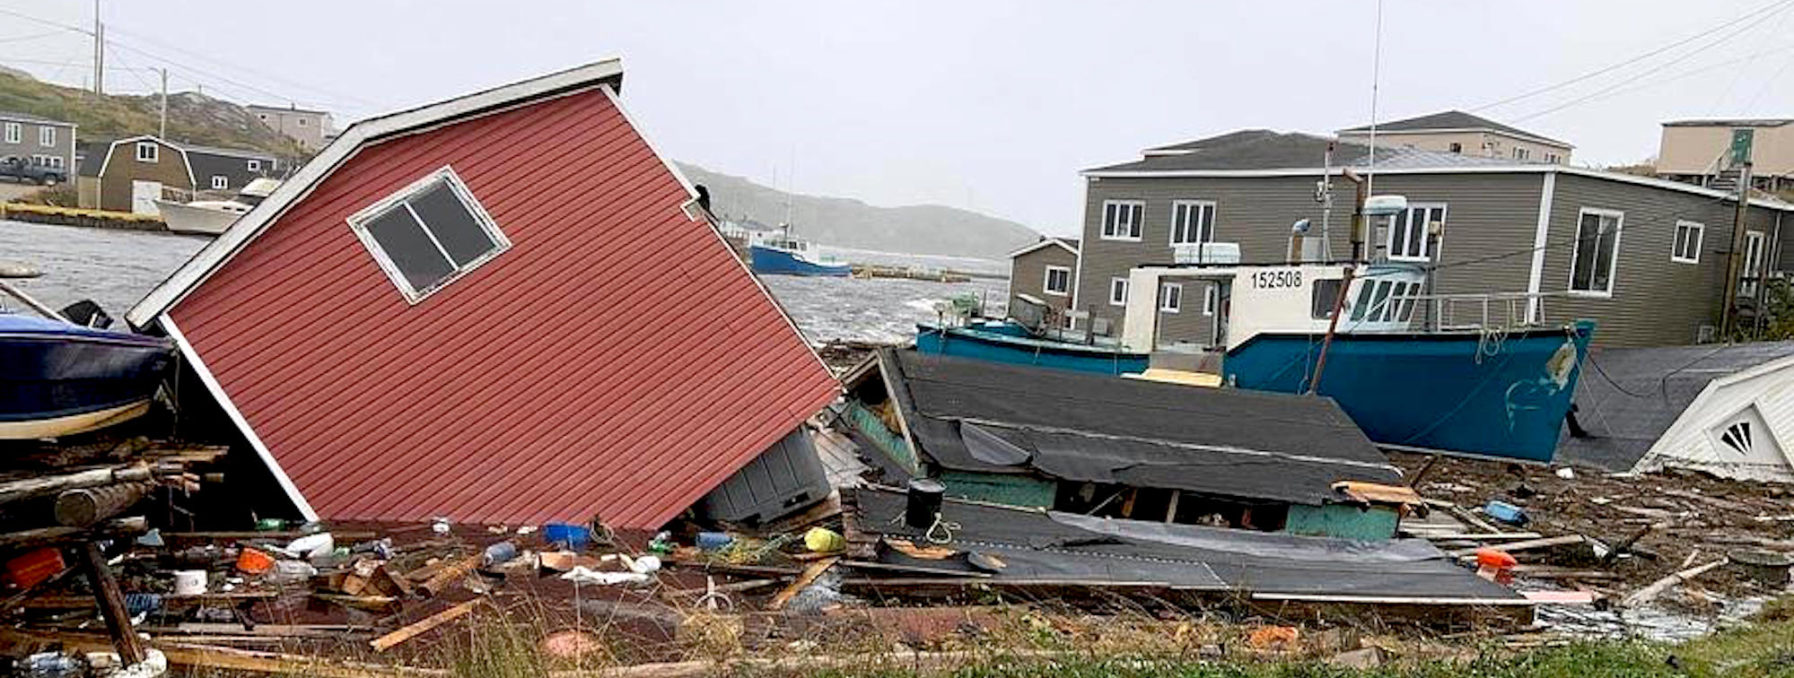 Damage caused by Hurricane Fiona near Port aux Basques, Newfoundland. Credit photo to Pauline Billard via AP.